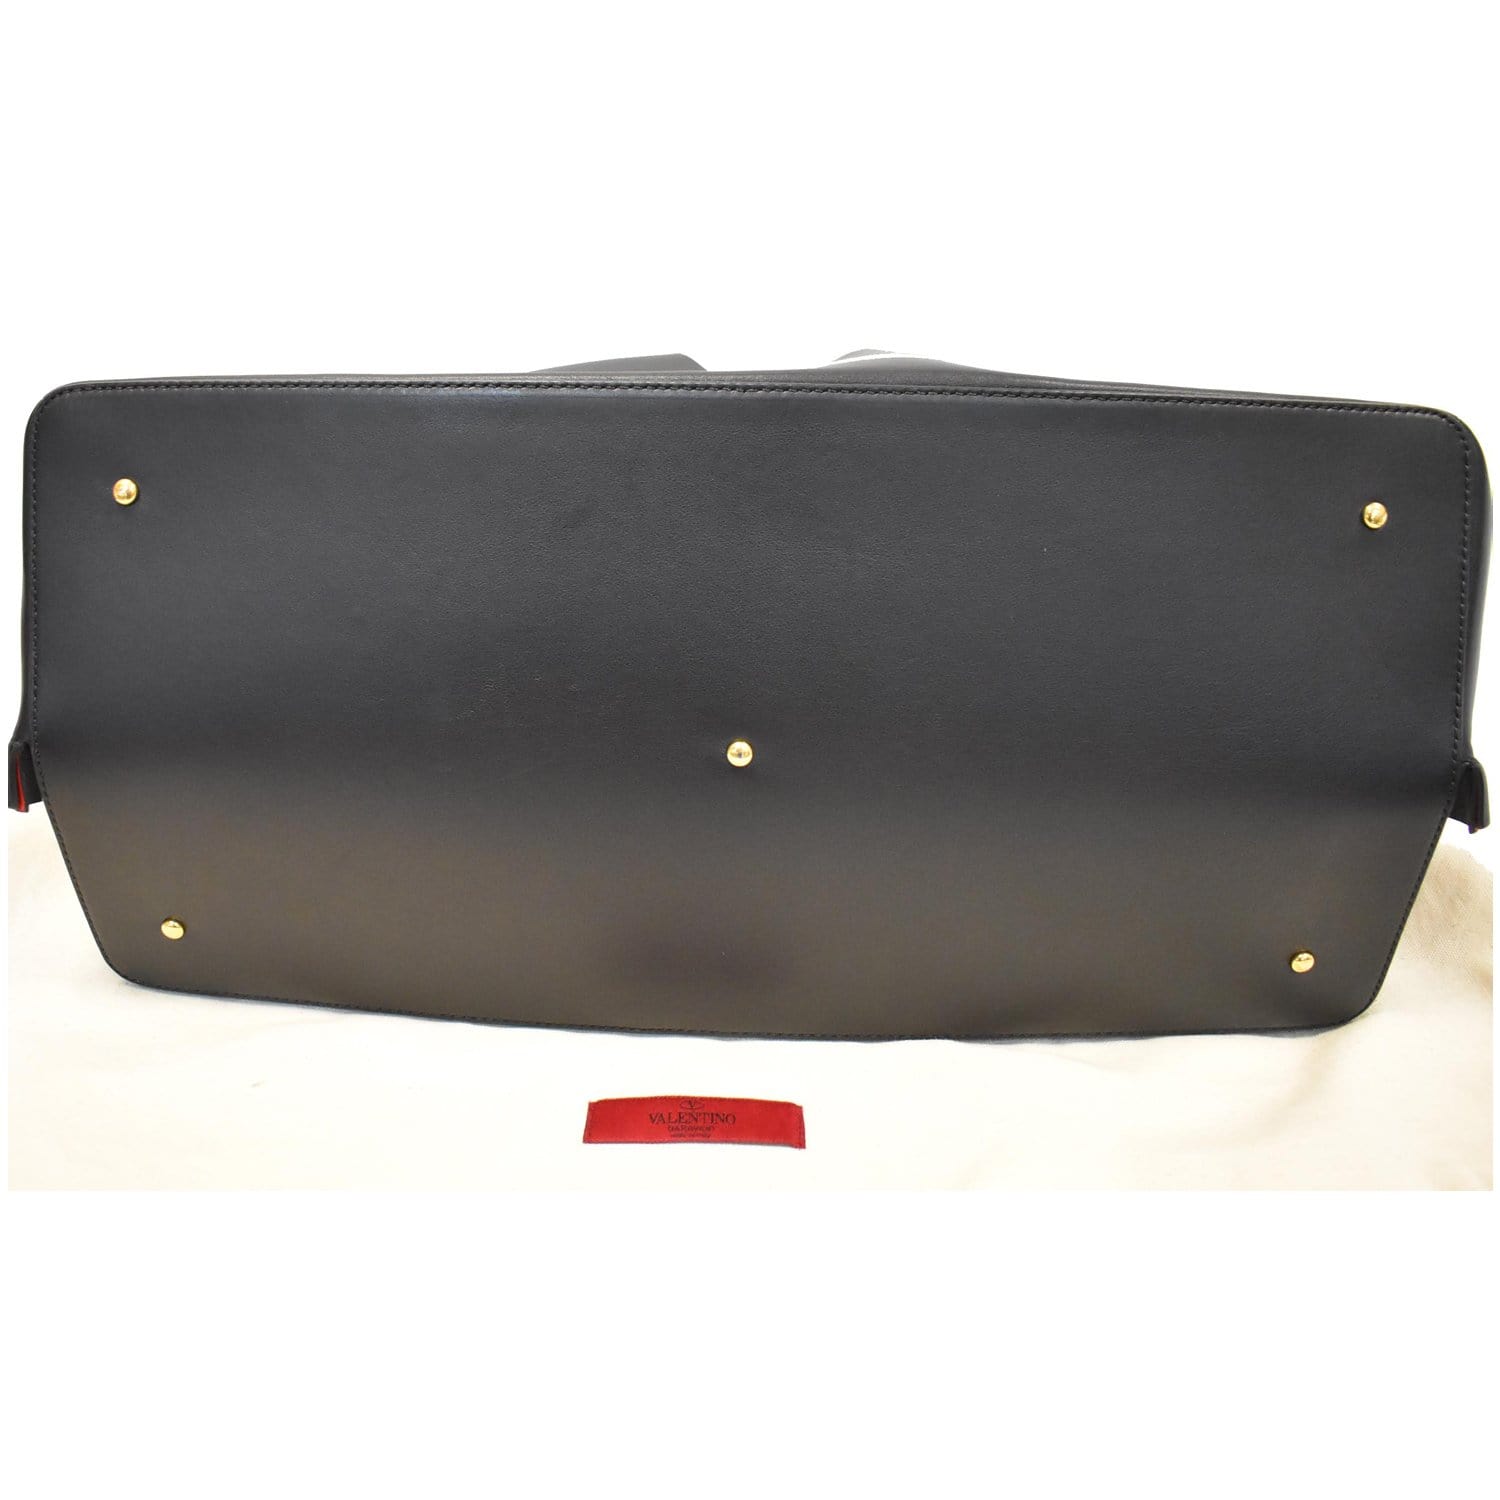 Valentino // Red & Black Leather VLogo Escape Bag – VSP Consignment